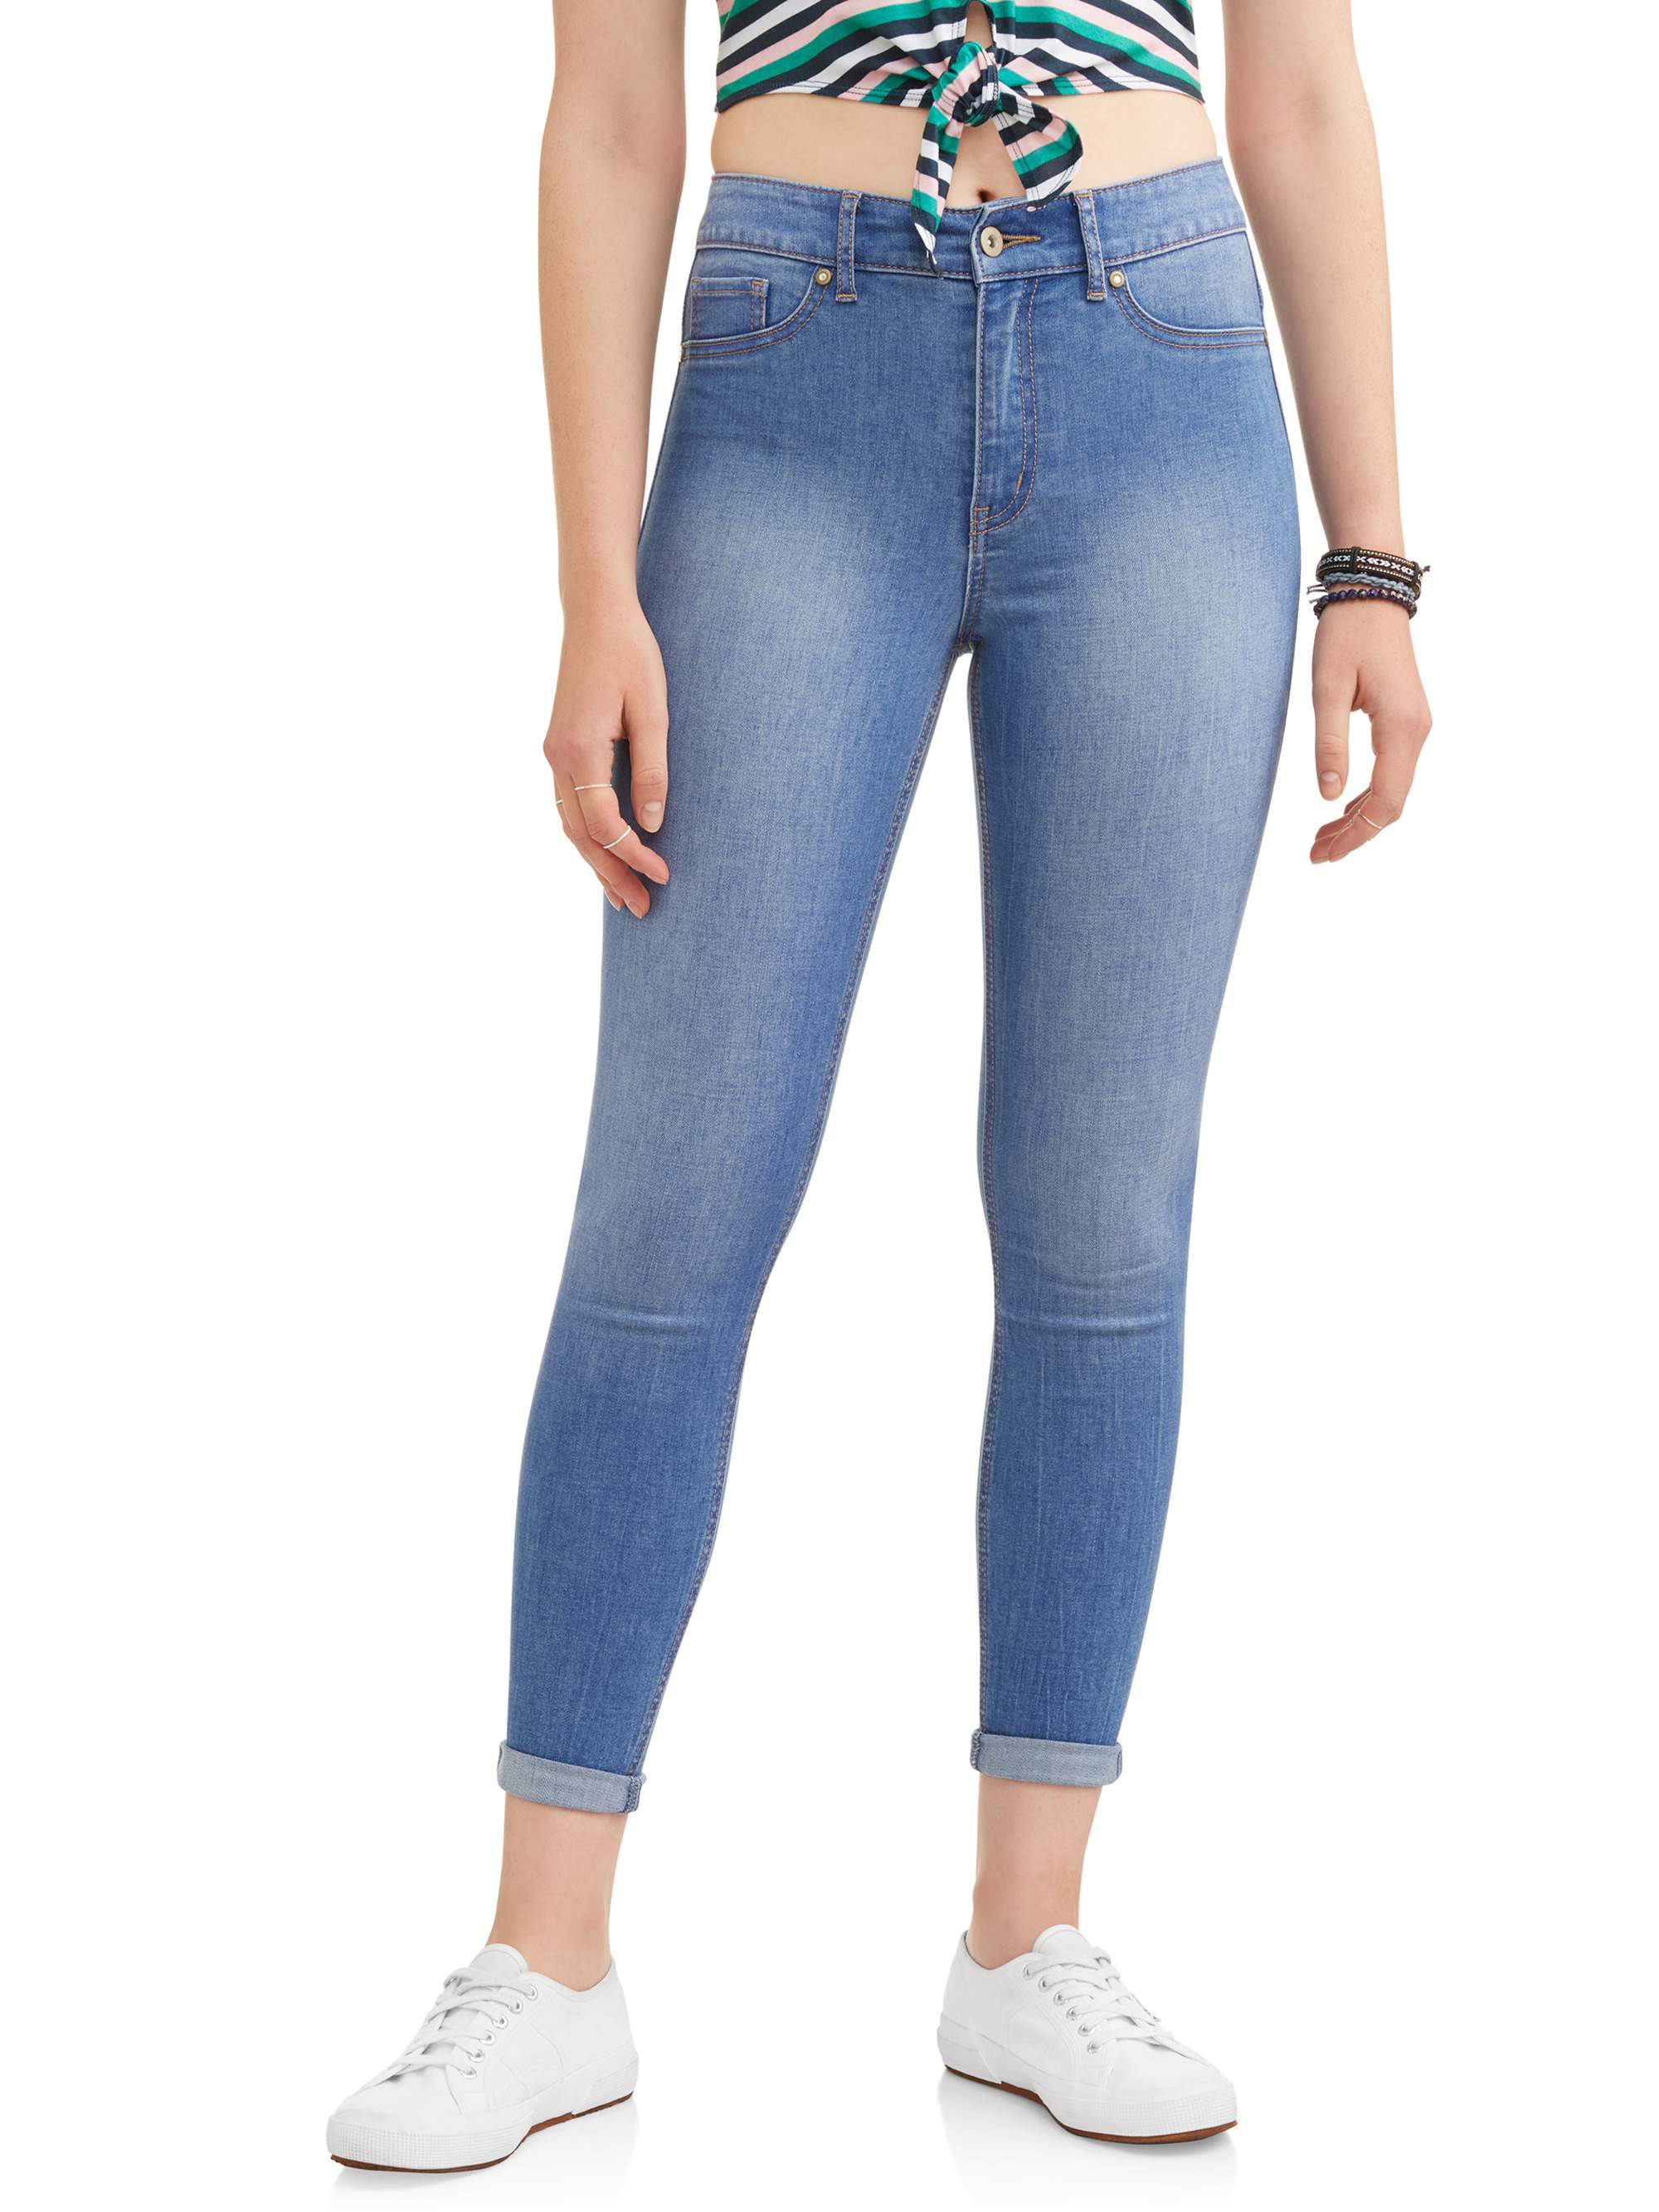 NOBO Roll Cuff Skinny Jeans - Walmart.com